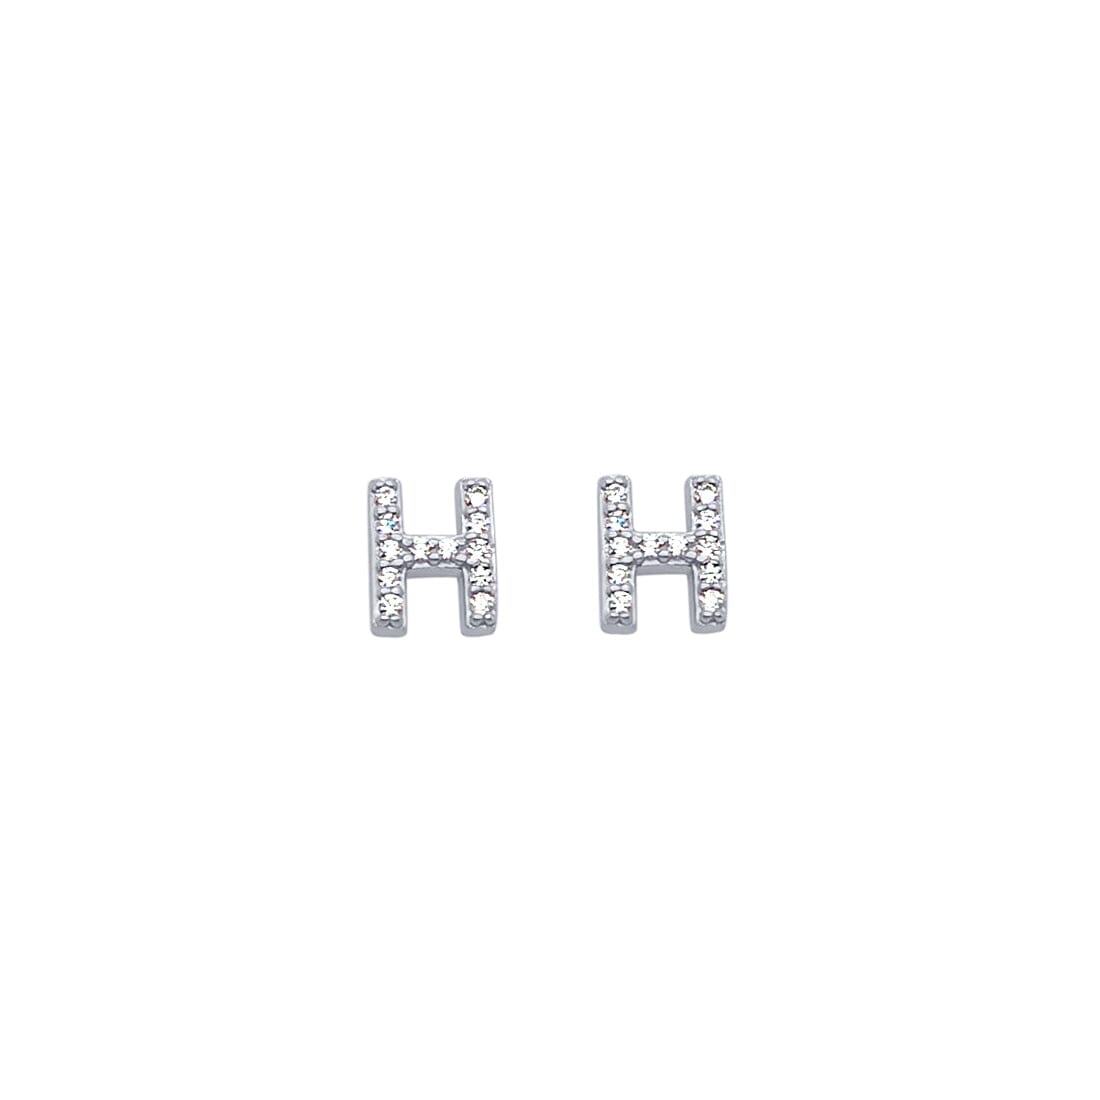 H Initial Stud Stud Earrings with Cubic Zirconia in Sterling Silver Earrings Bevilles 